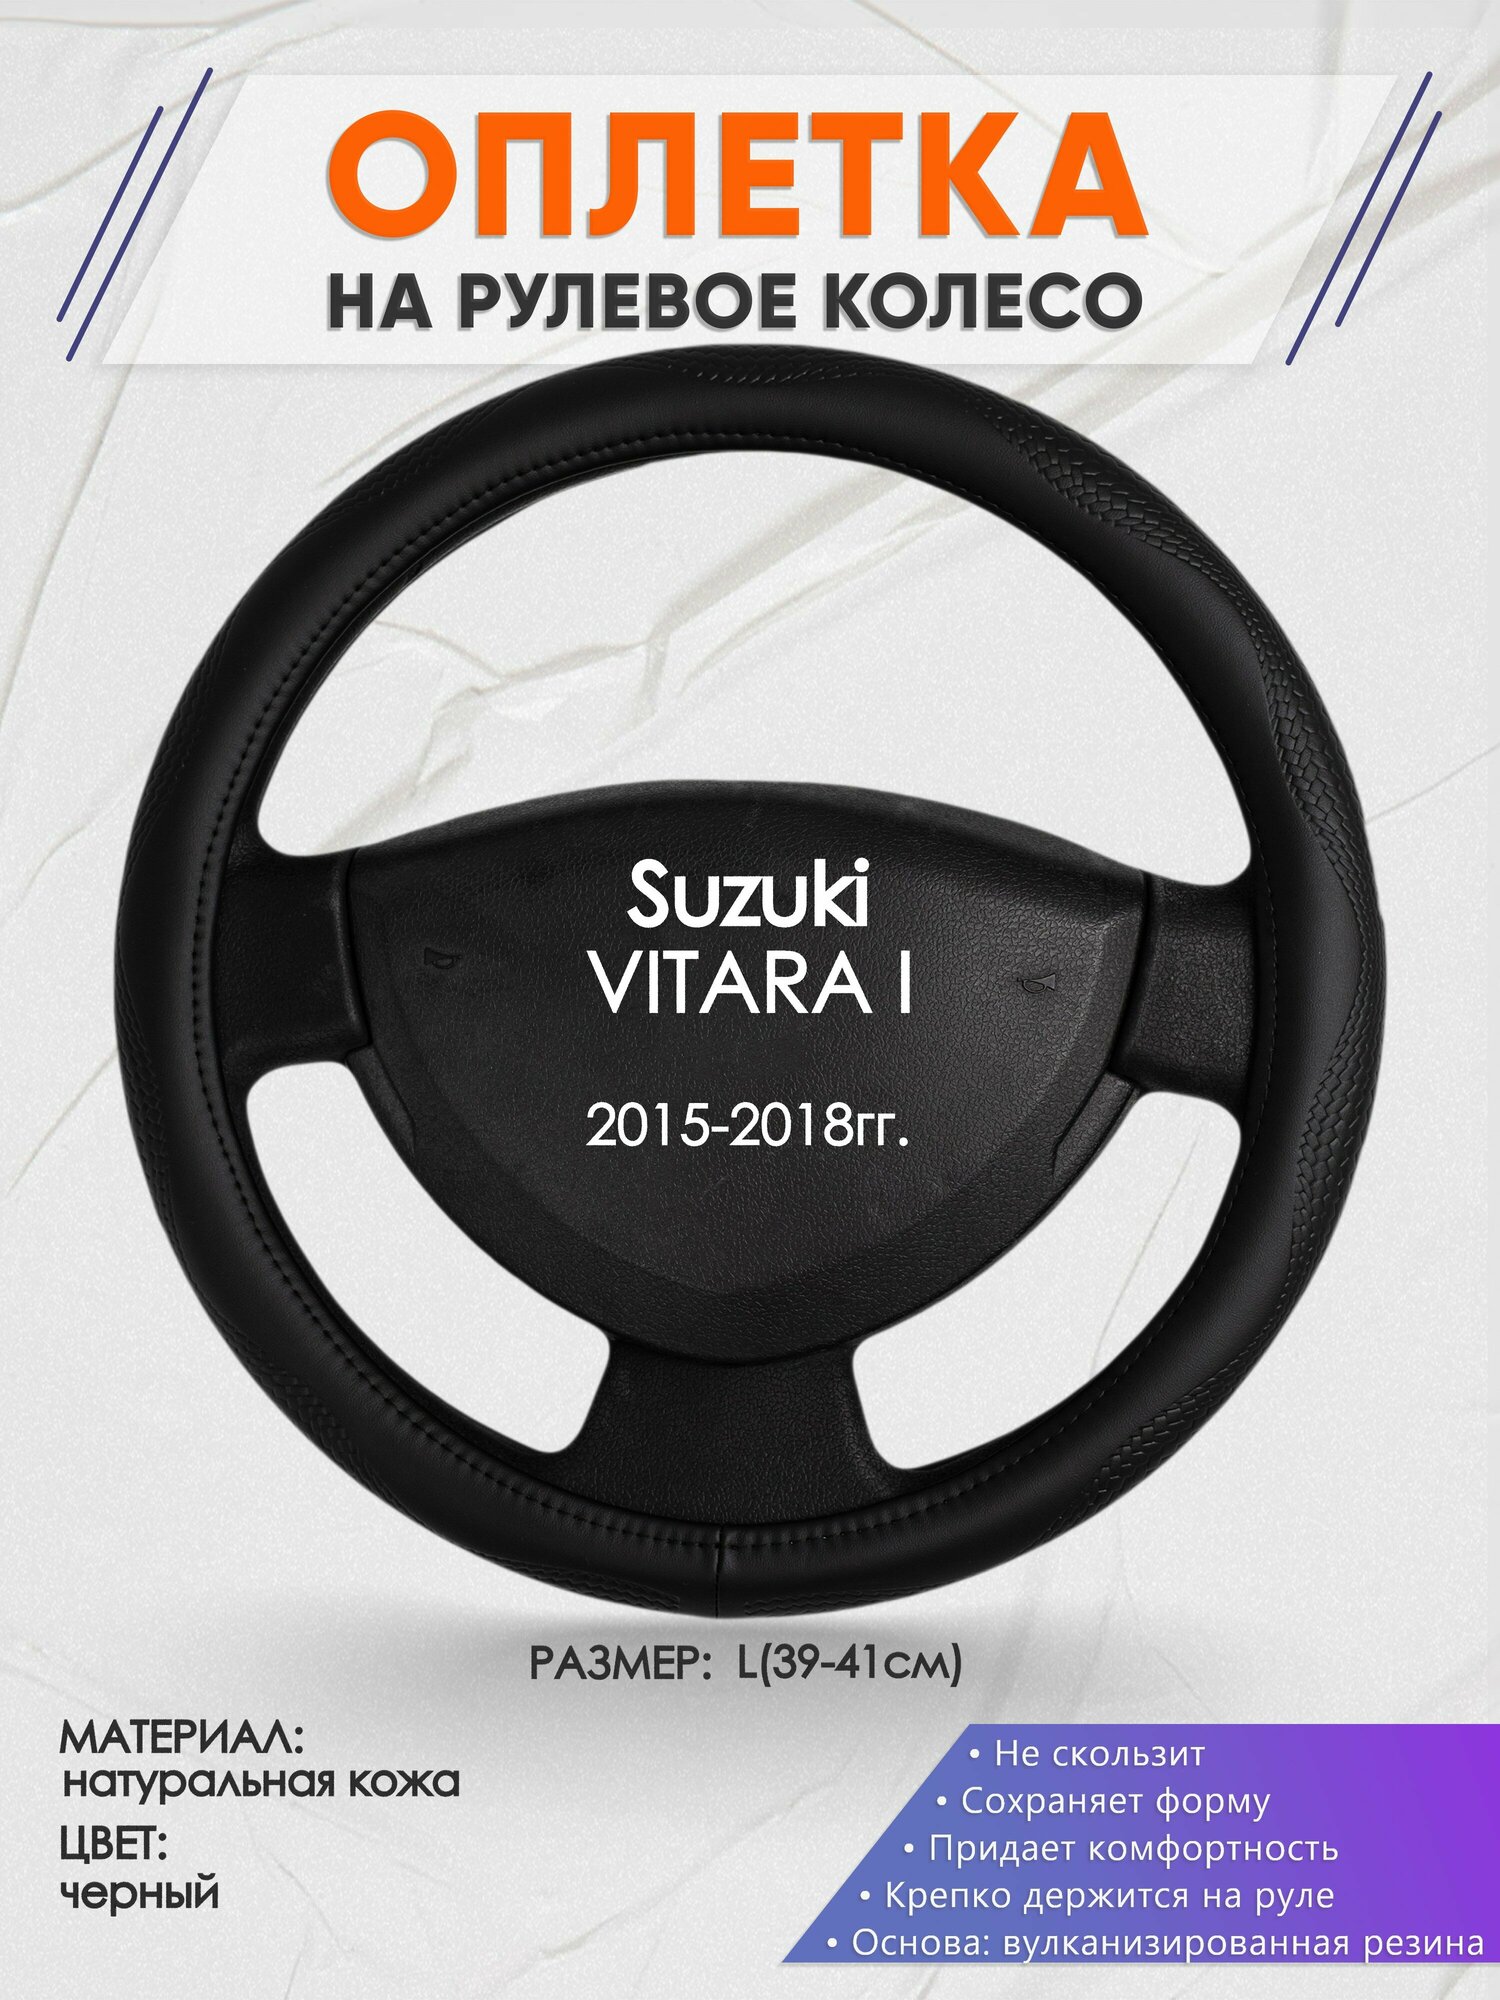 Оплетка на руль для Suzuki VITARA I(Сузуки Витара 1) 2015-2018, L(39-41см), Натуральная кожа 32